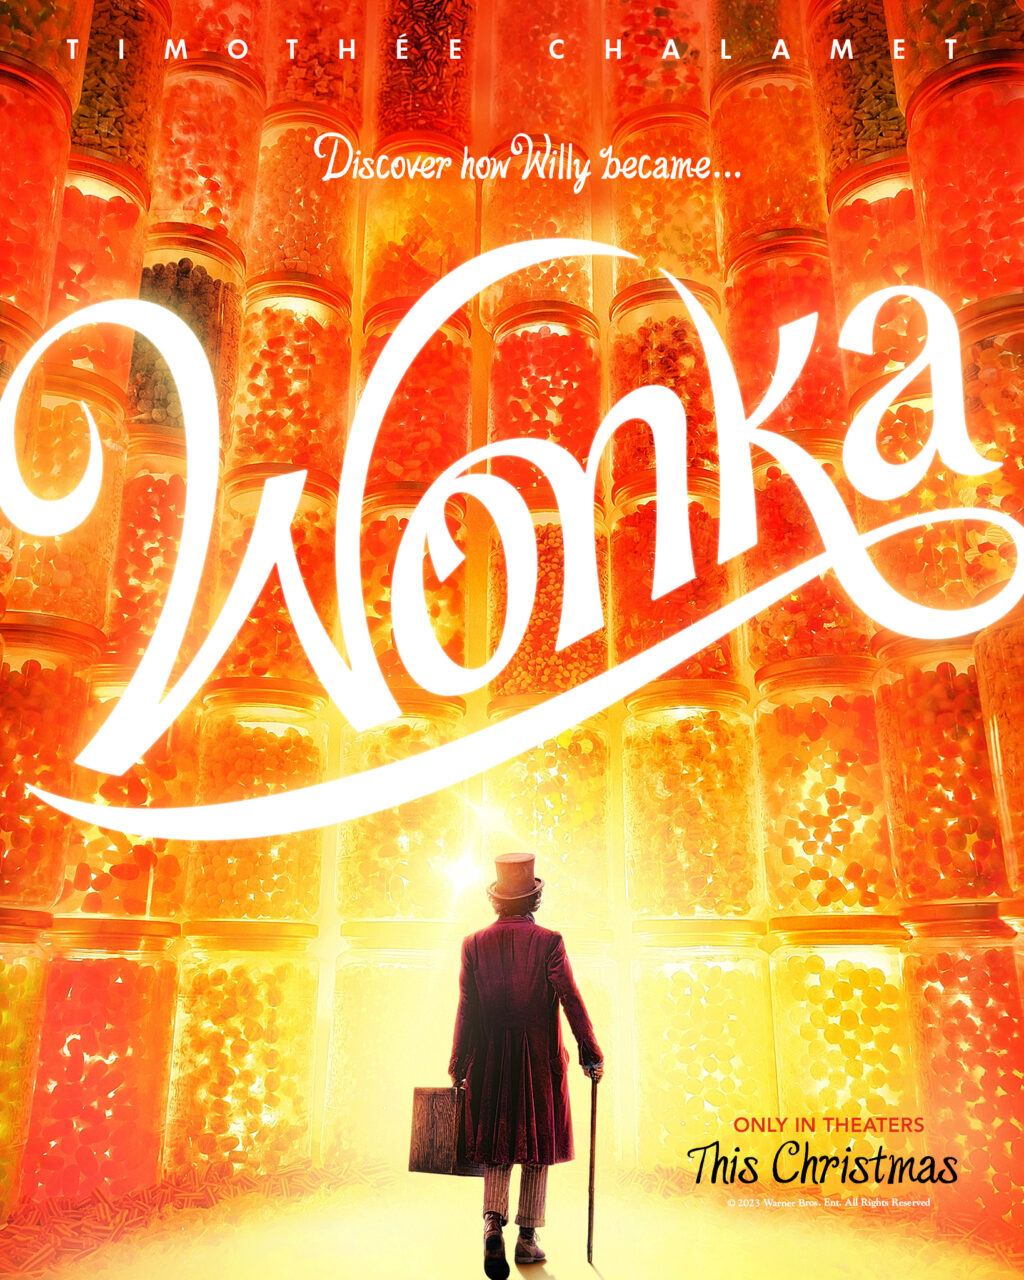 Wonka poster (Warner Bros. Discovery)